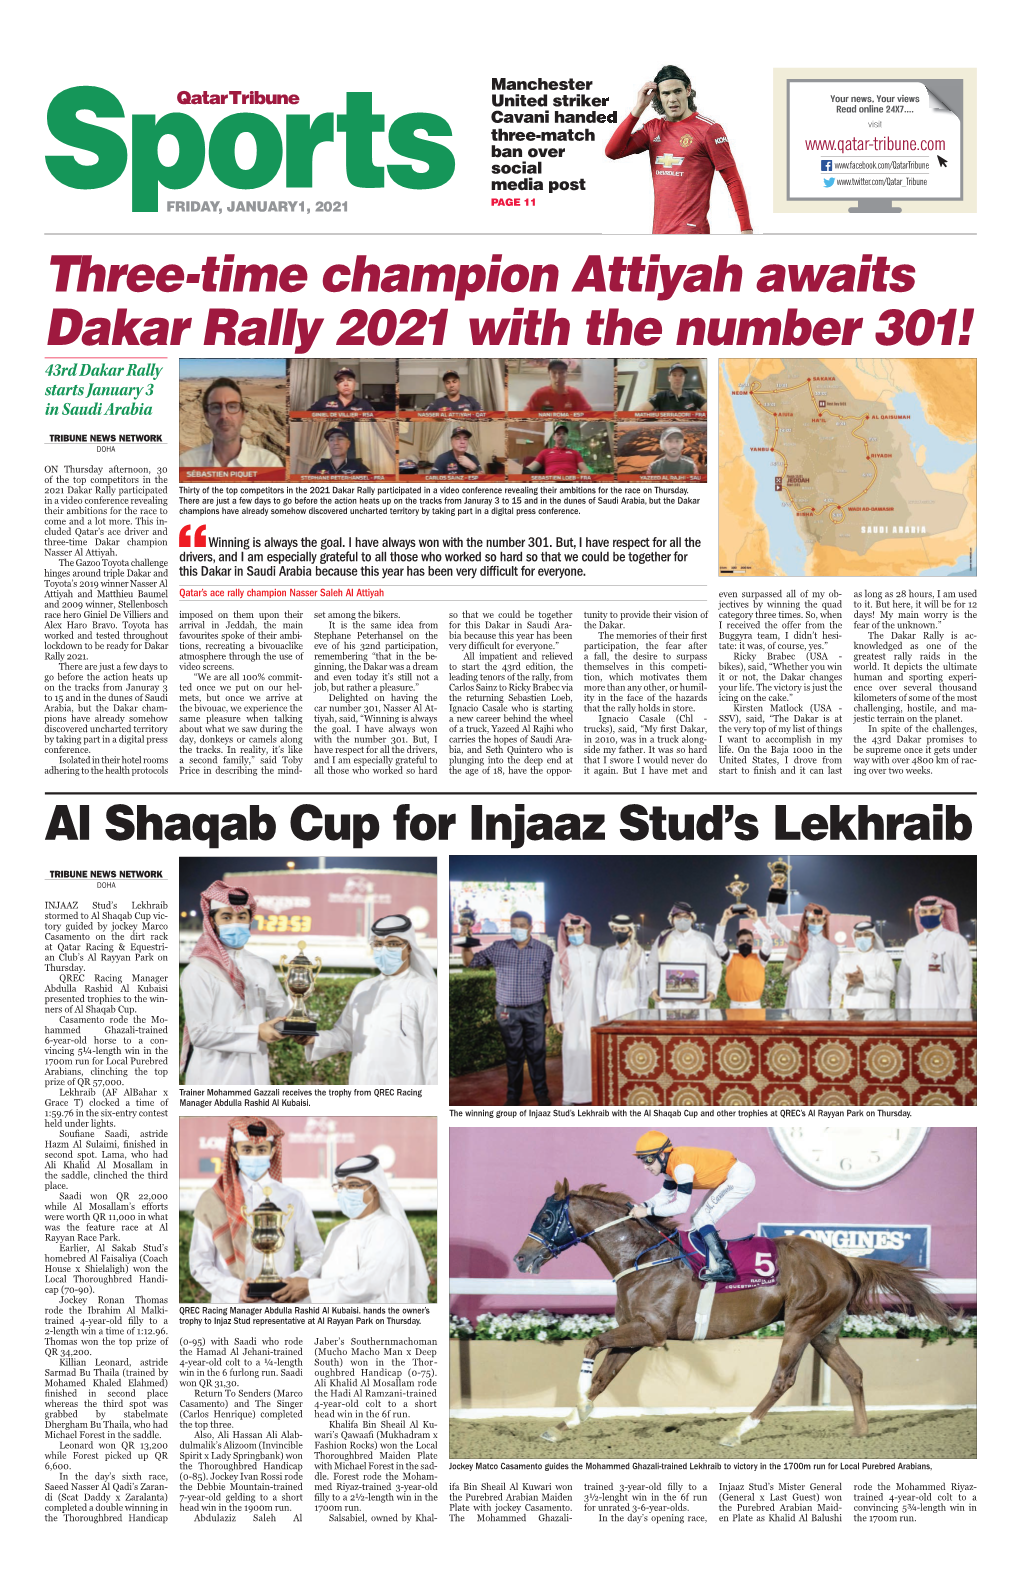 Three-Time Champion Attiyah Awaits Dakar Rally 2021 with the Number 301! 43Rd Dakar Rally Starts January 3 in Saudi Arabia